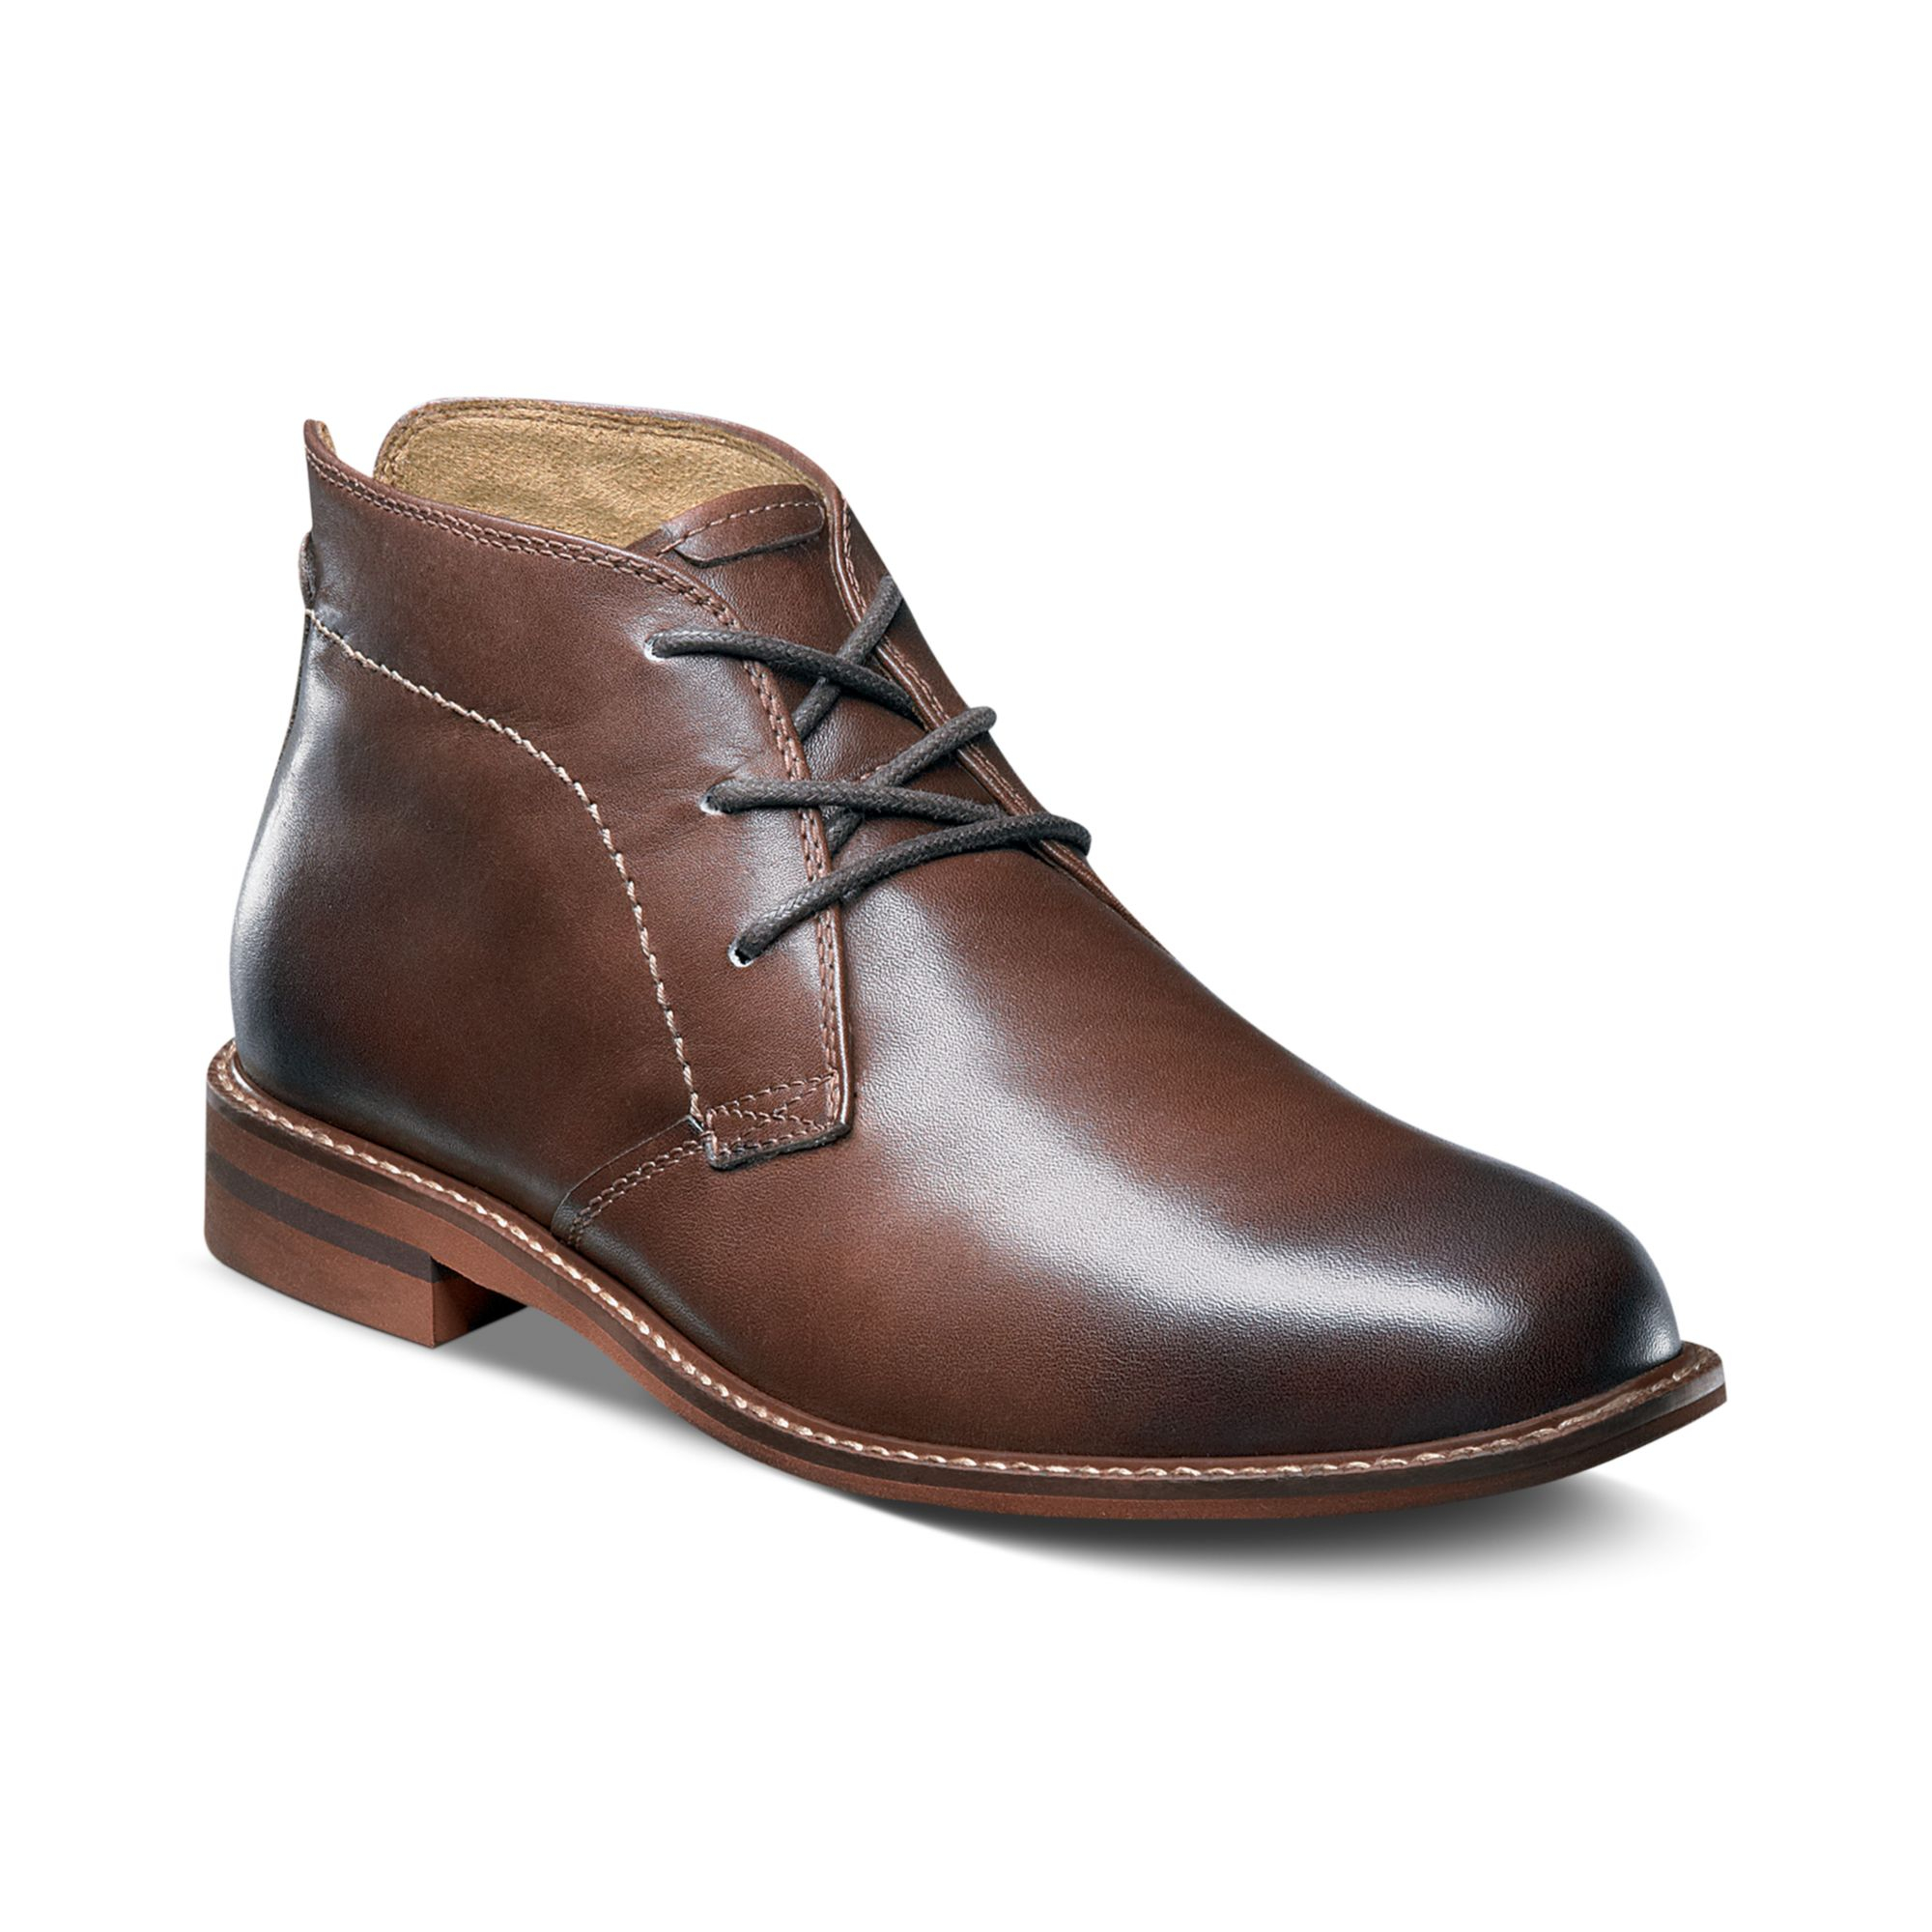 Lyst - Florsheim Doon Chukka Boots in Brown for Men